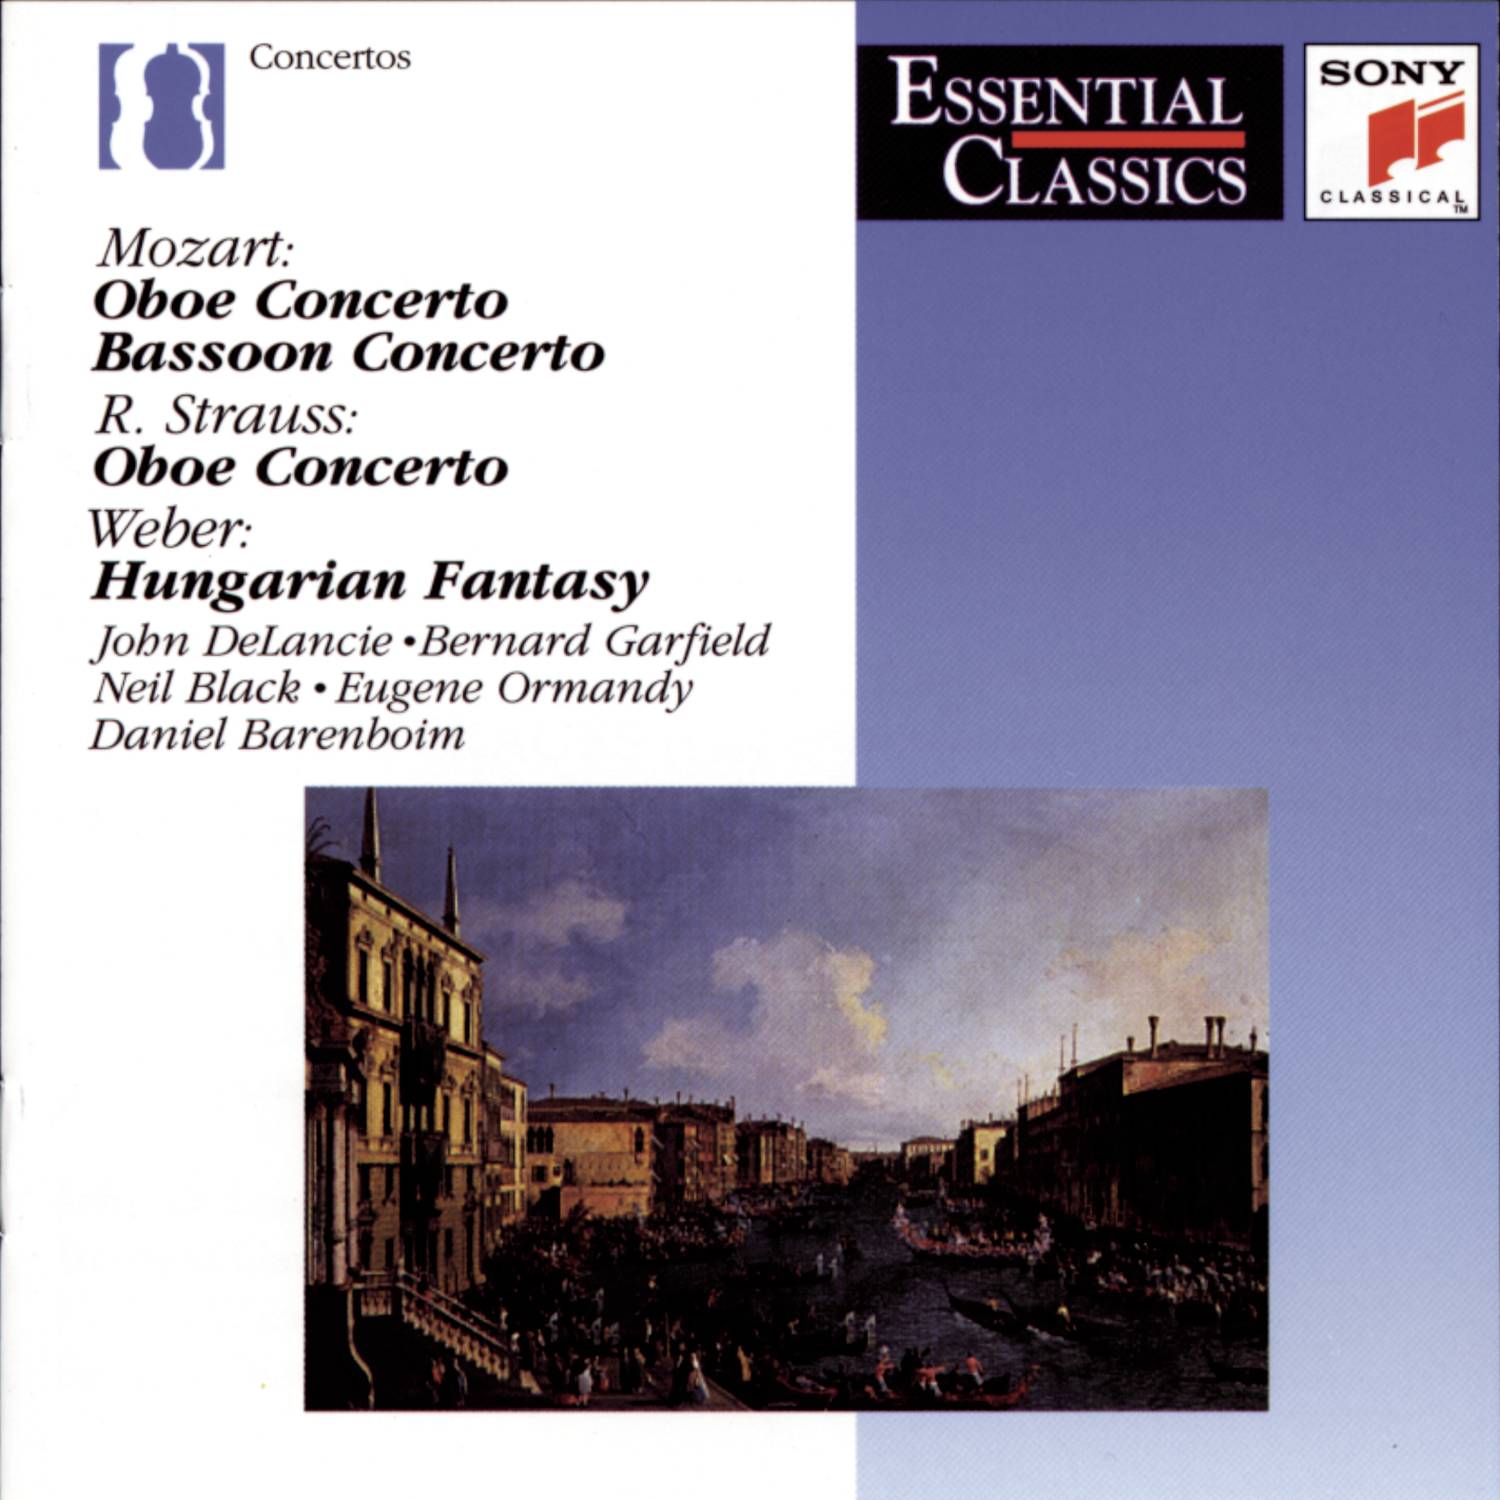 Concerto for Oboe and Small Orchestra: Andante